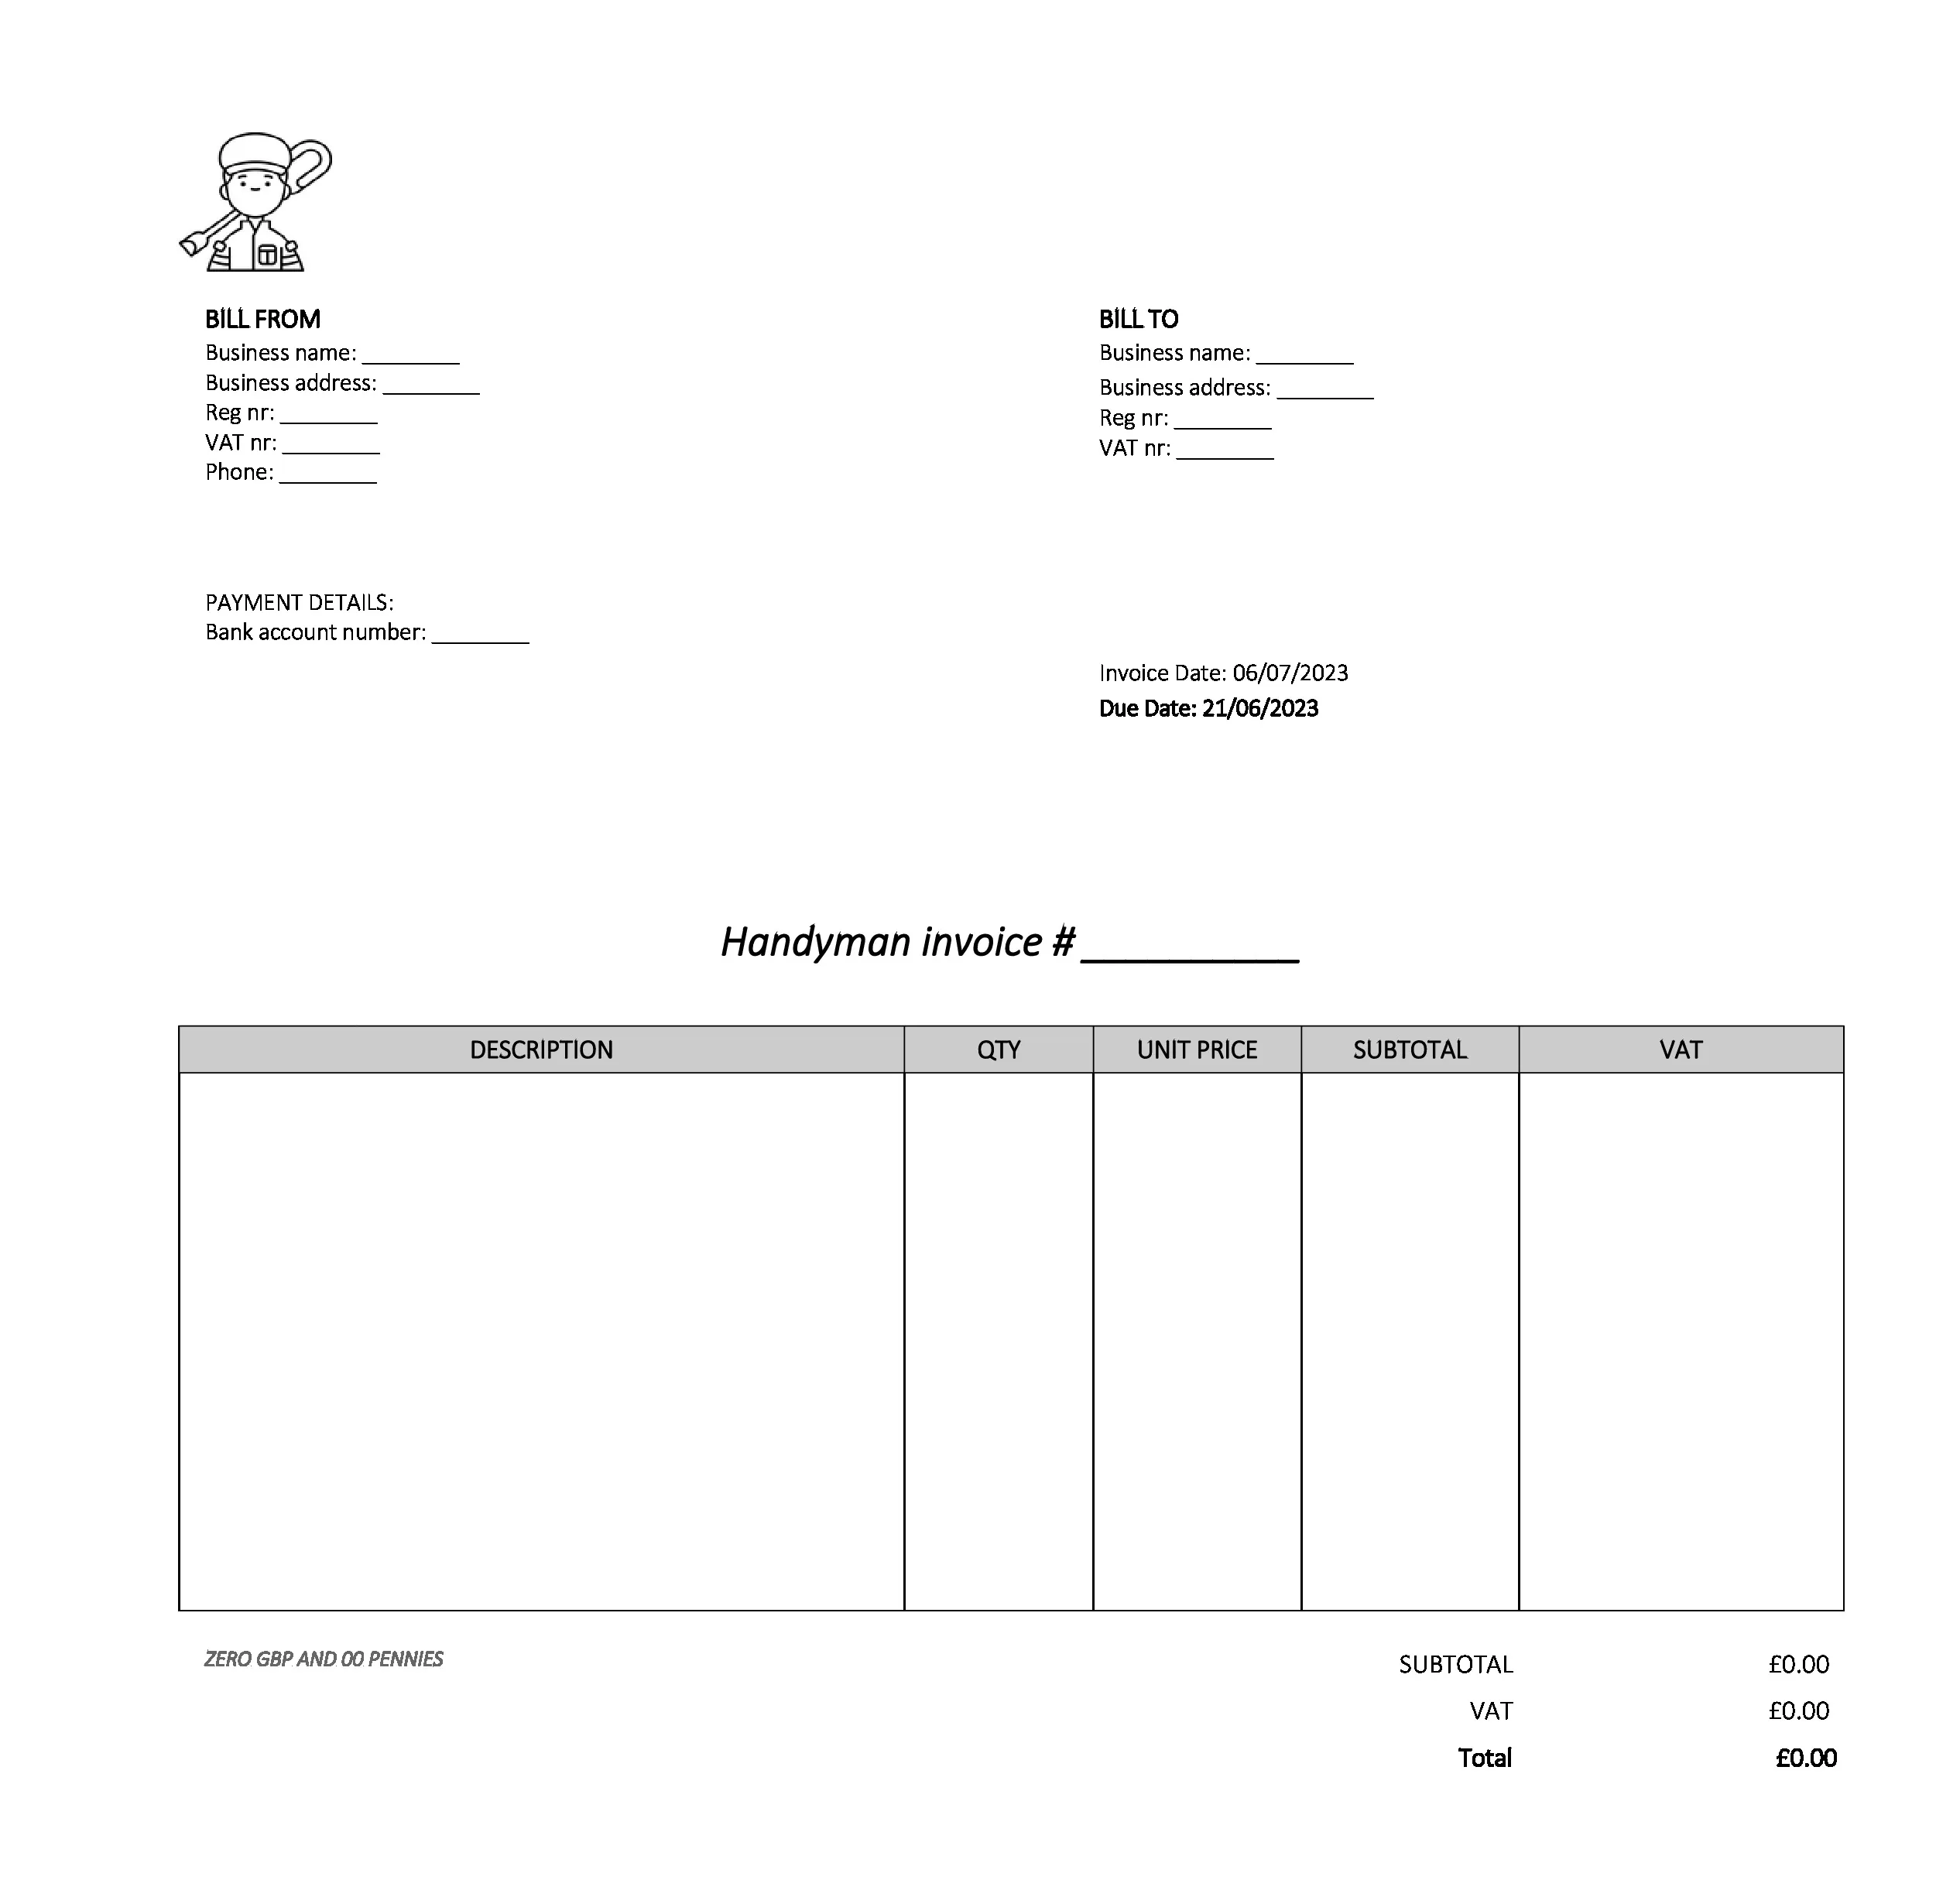 empty handyman invoice template UK Excel / Google sheets